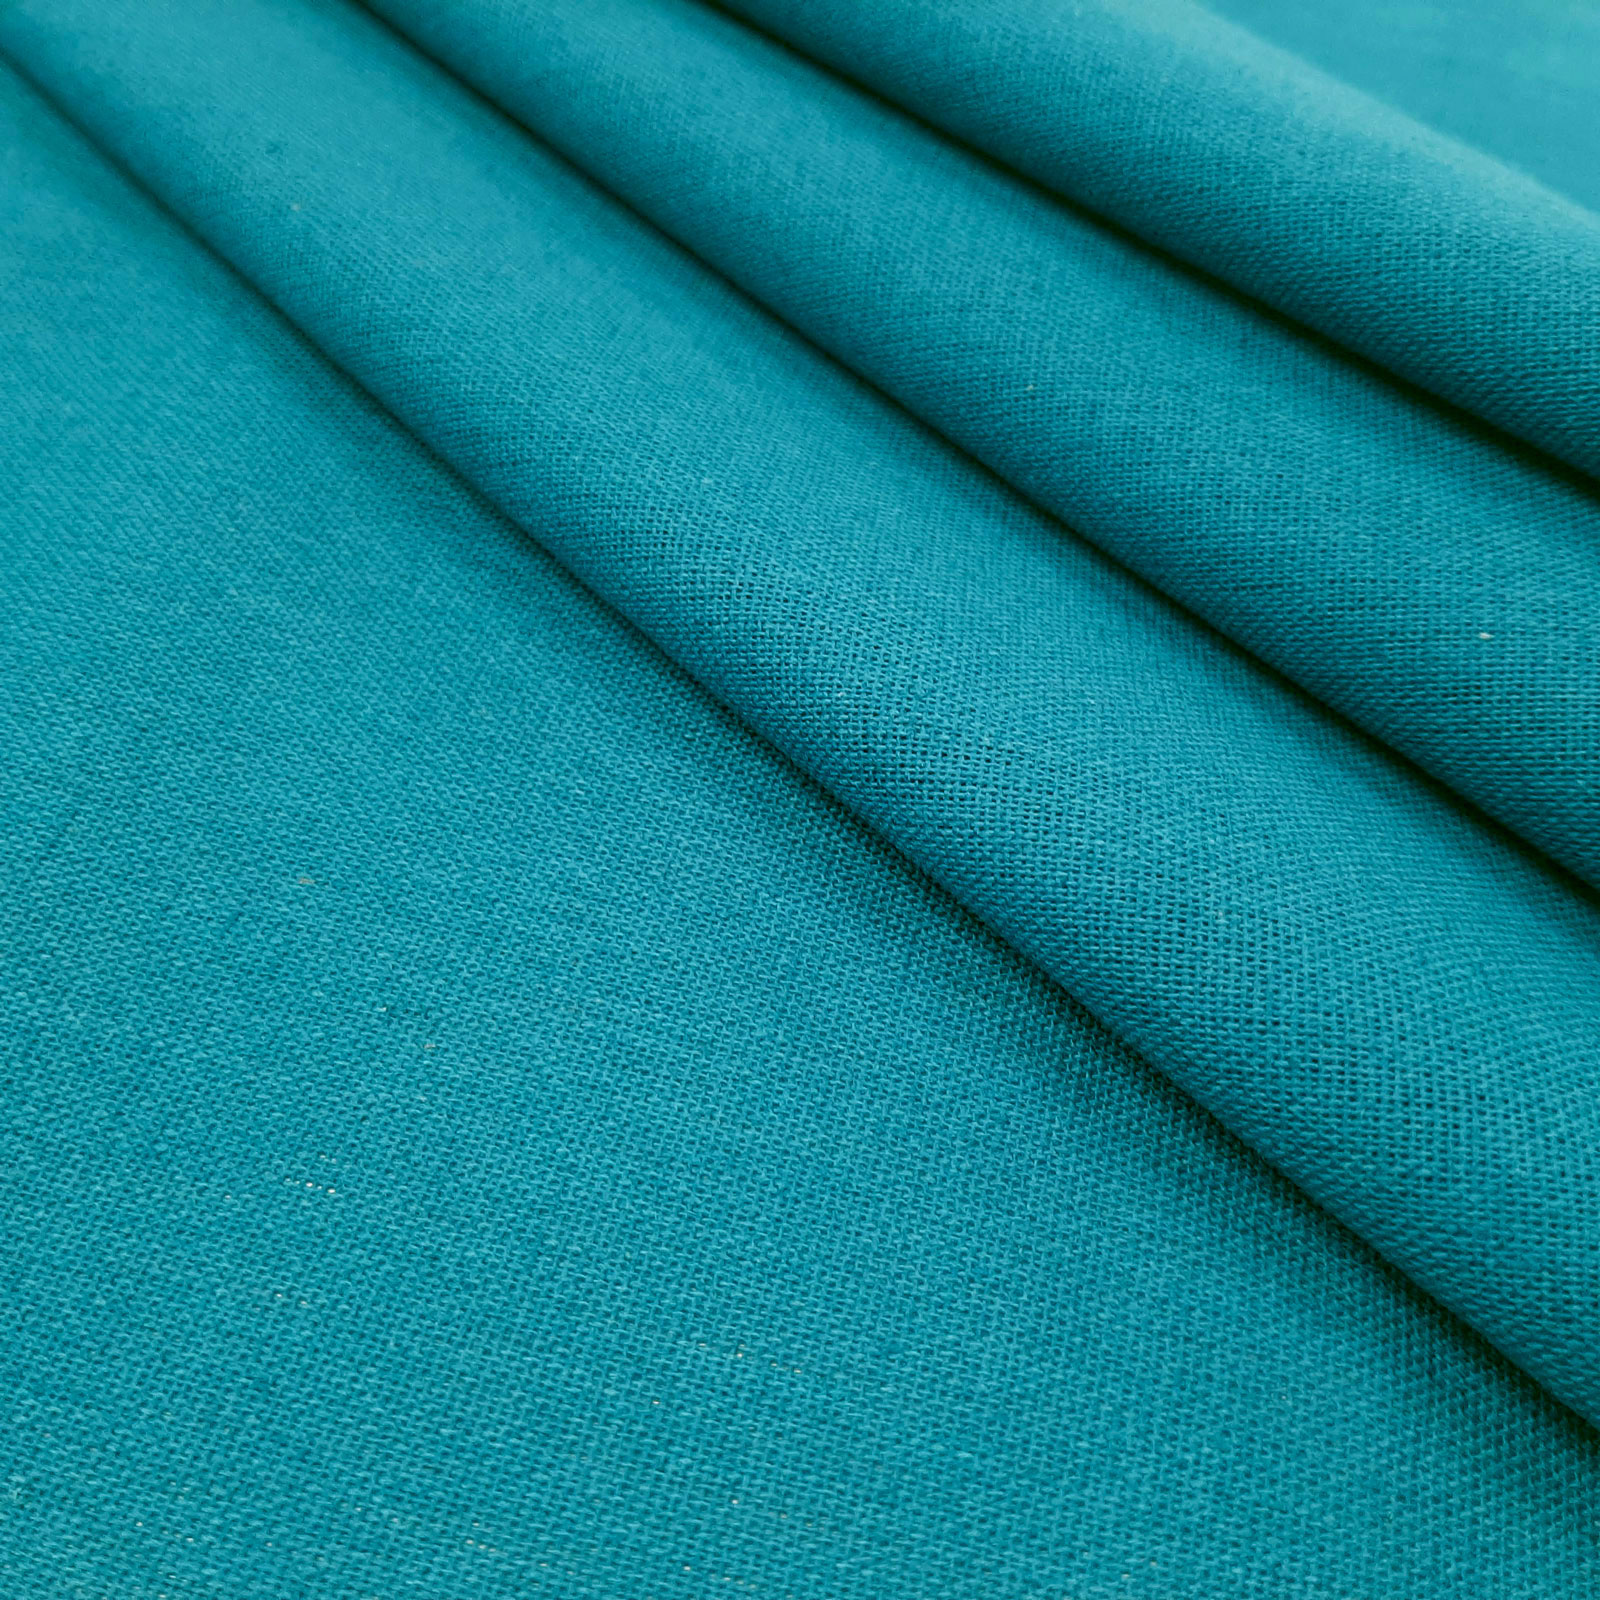 Bella - natural linen cotton fabric - Blue-Petrol